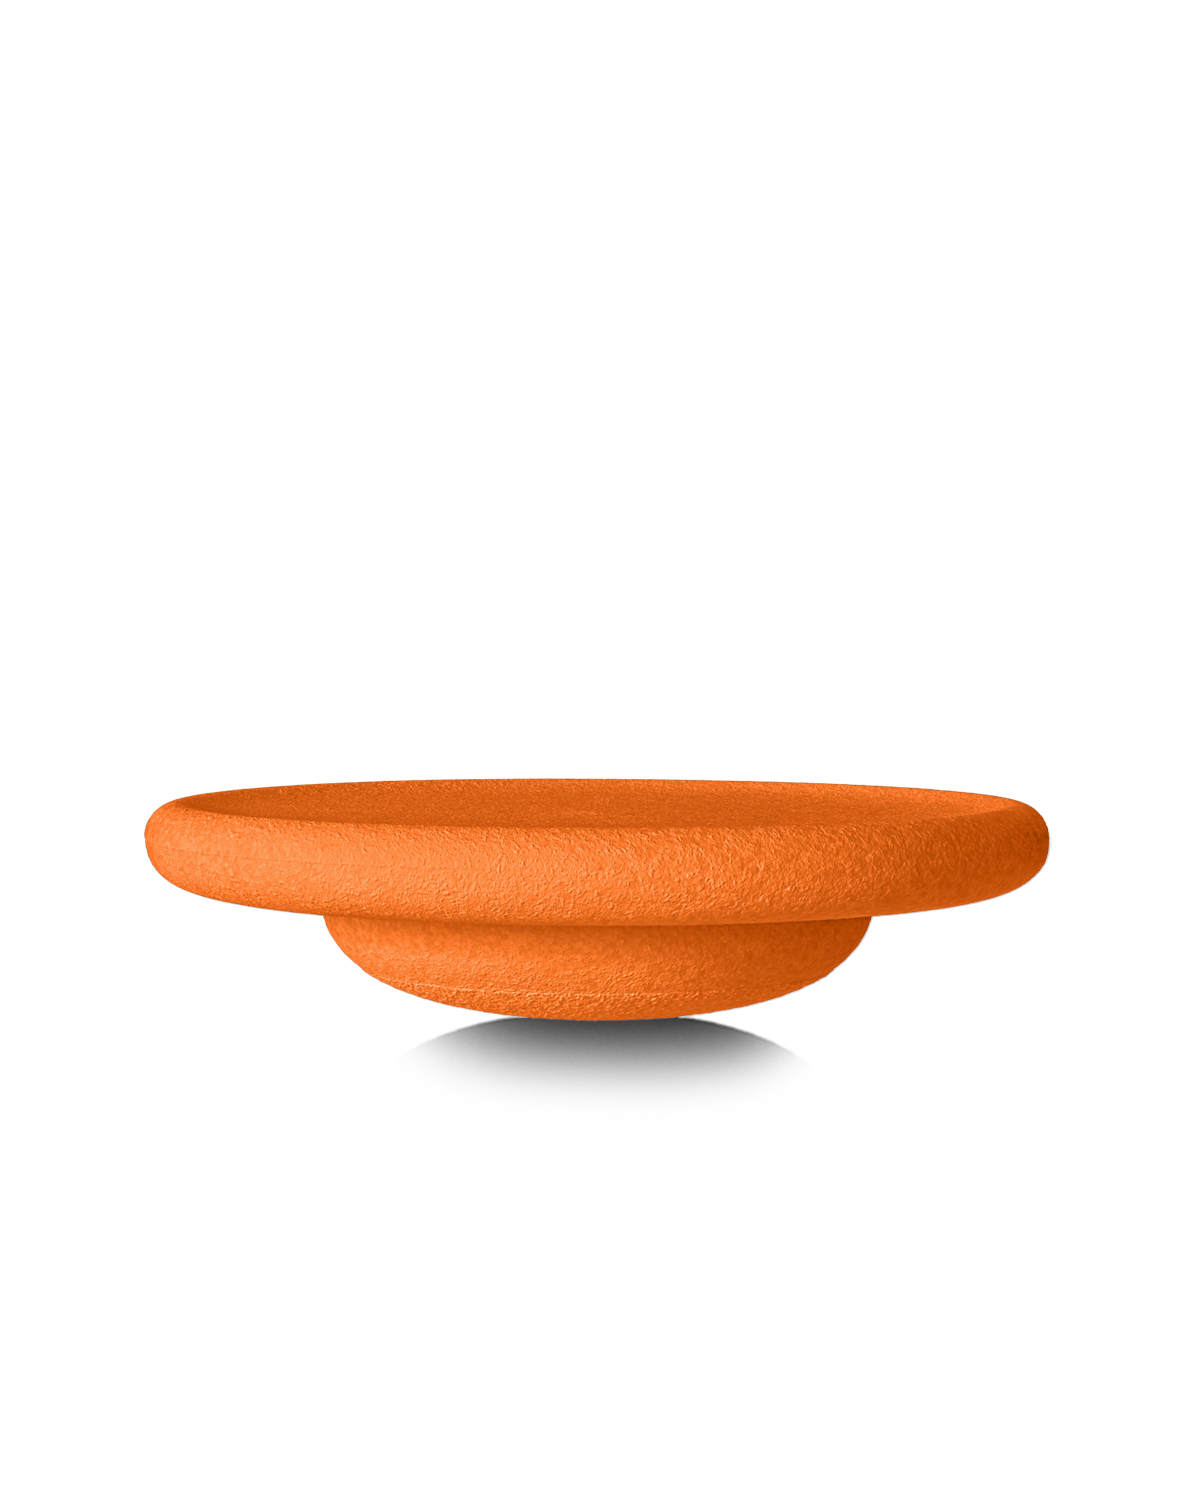 
  
  Stapelstein Balance Board Orange
  
